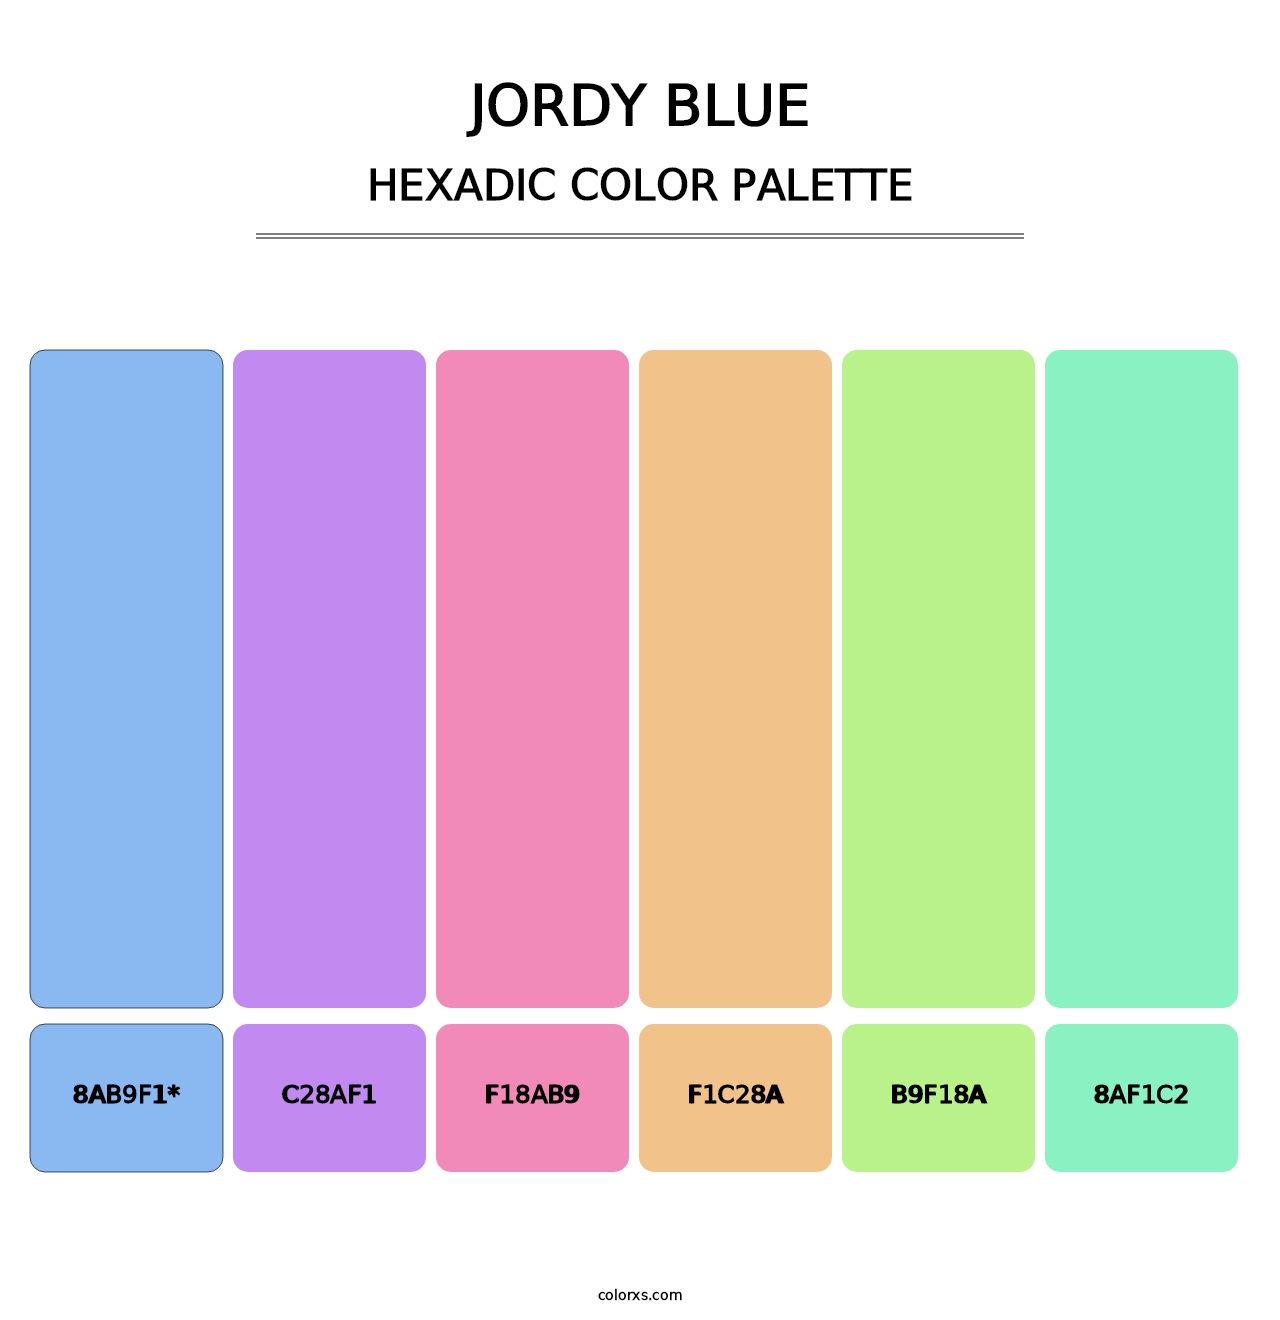 Jordy Blue - Hexadic Color Palette